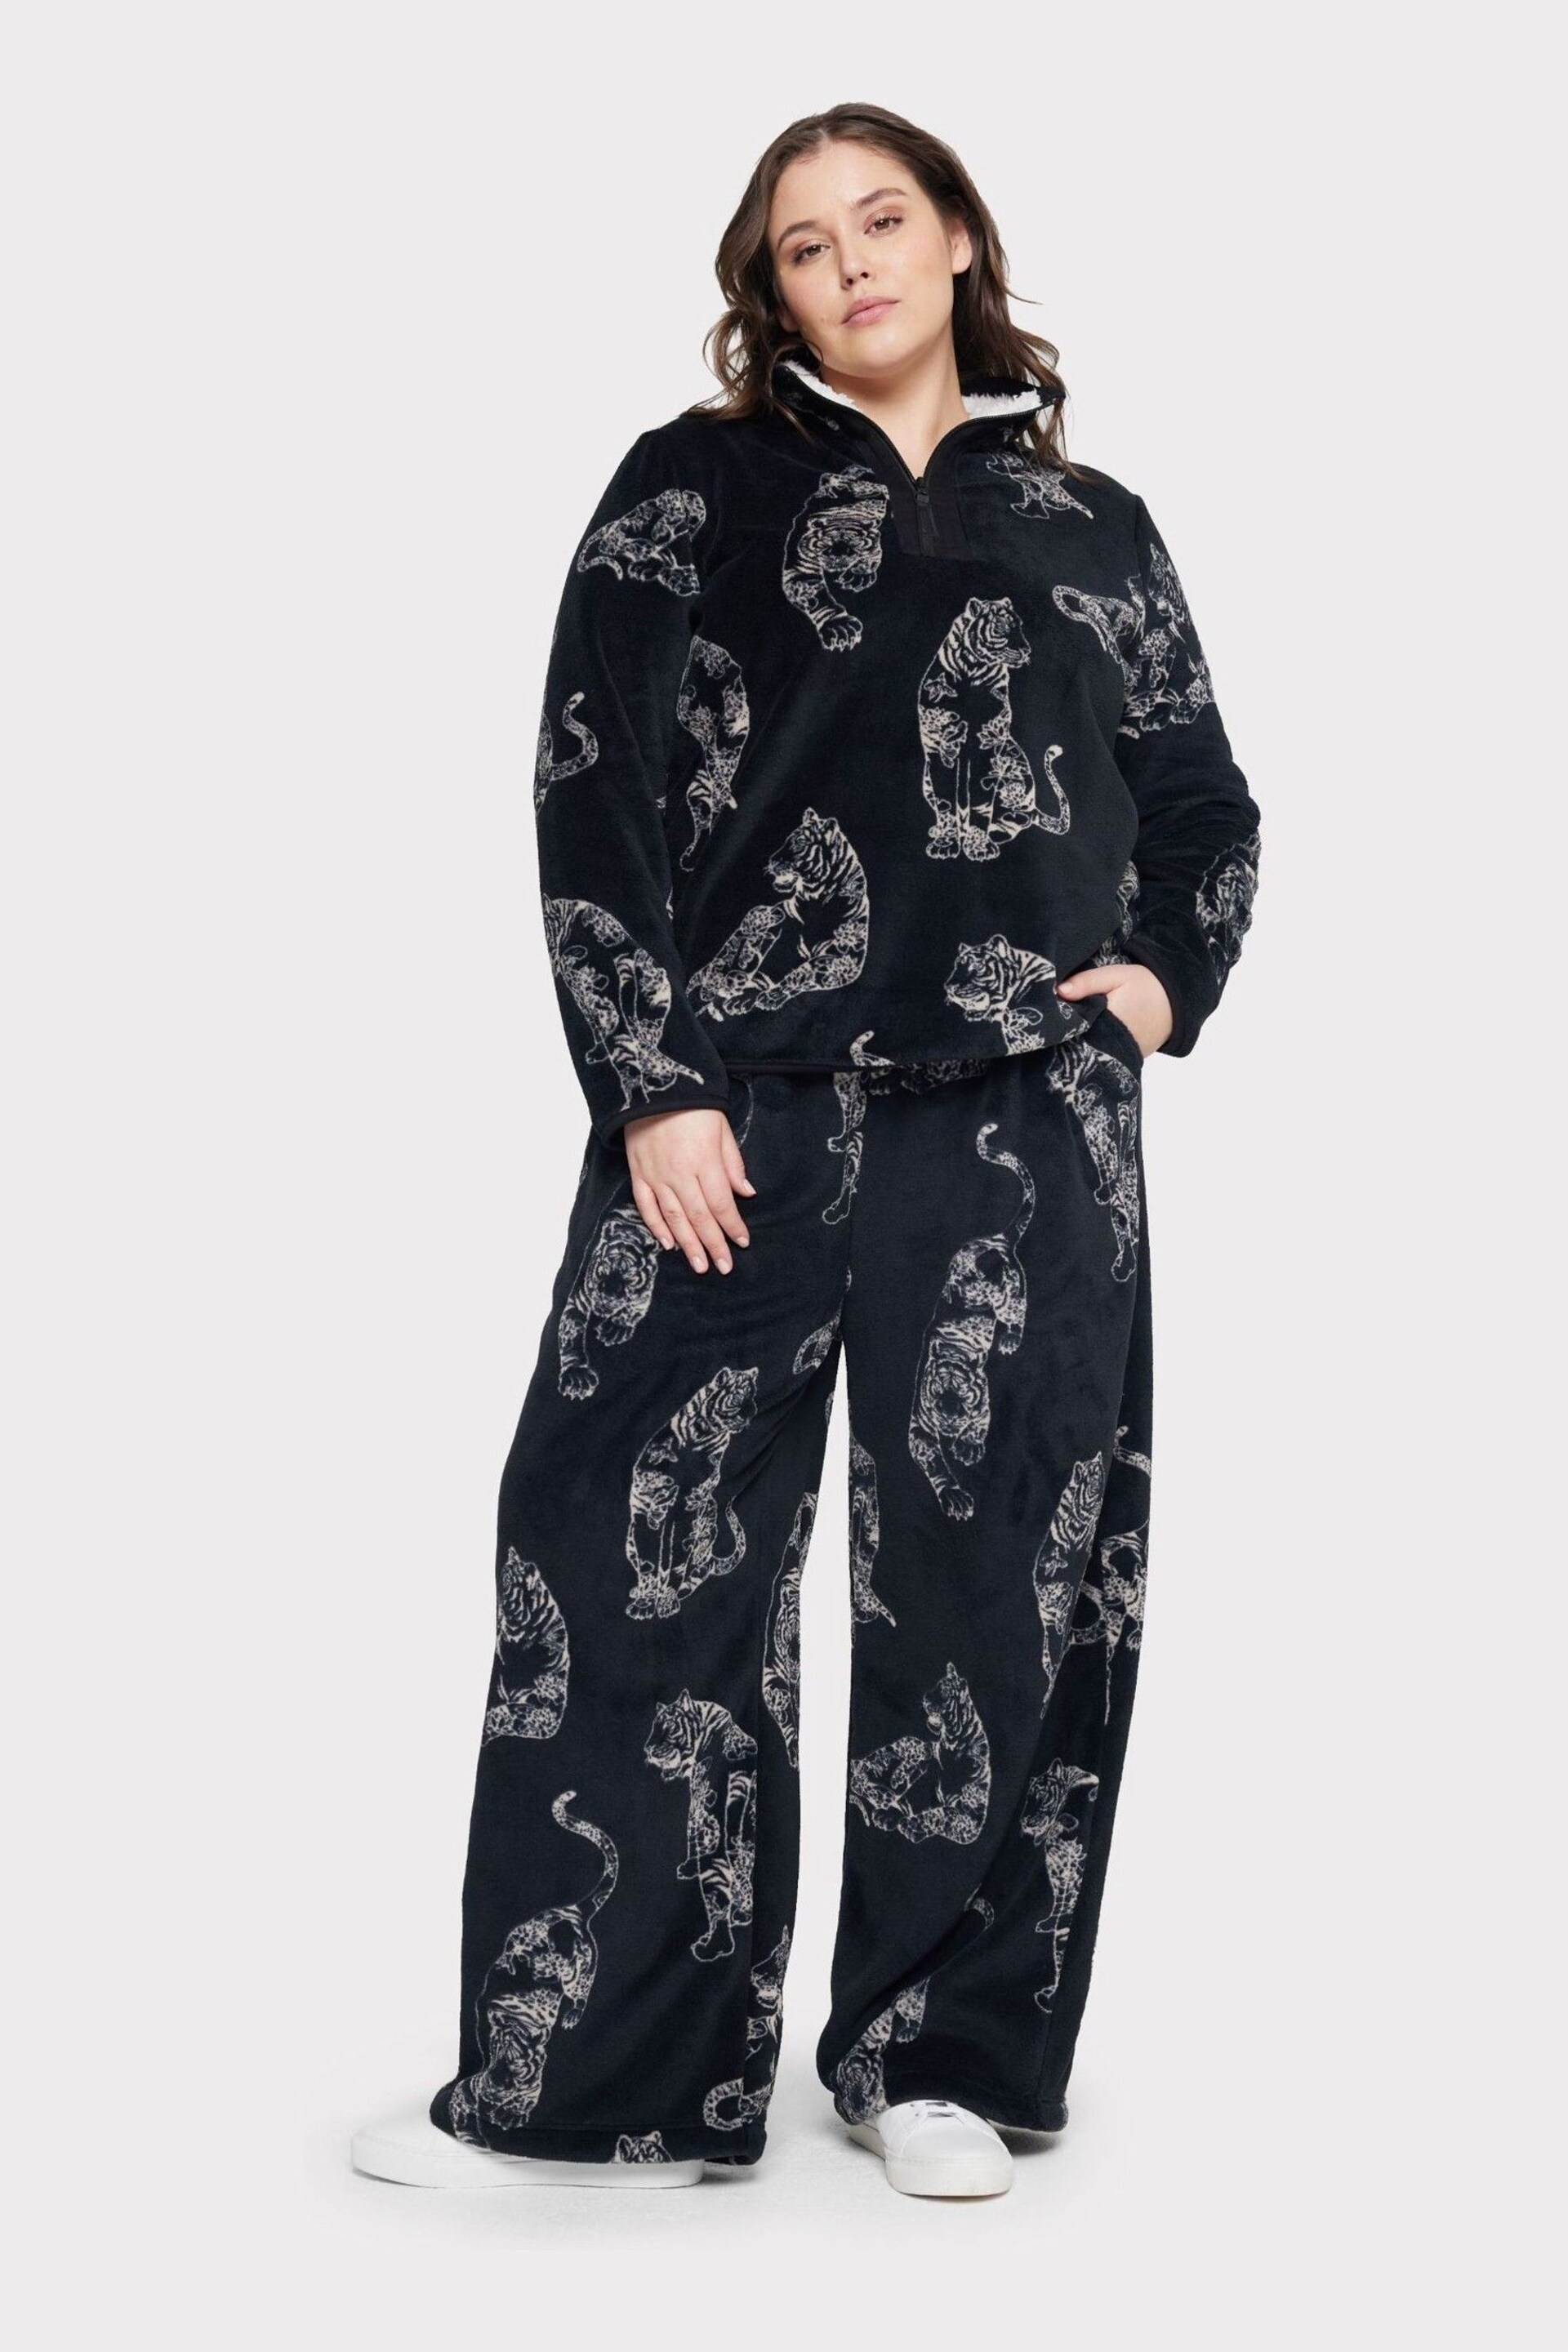 Chelsea Peers Black Curve Fleece Linear Tiger Print Co-ord Set - Image 1 of 5